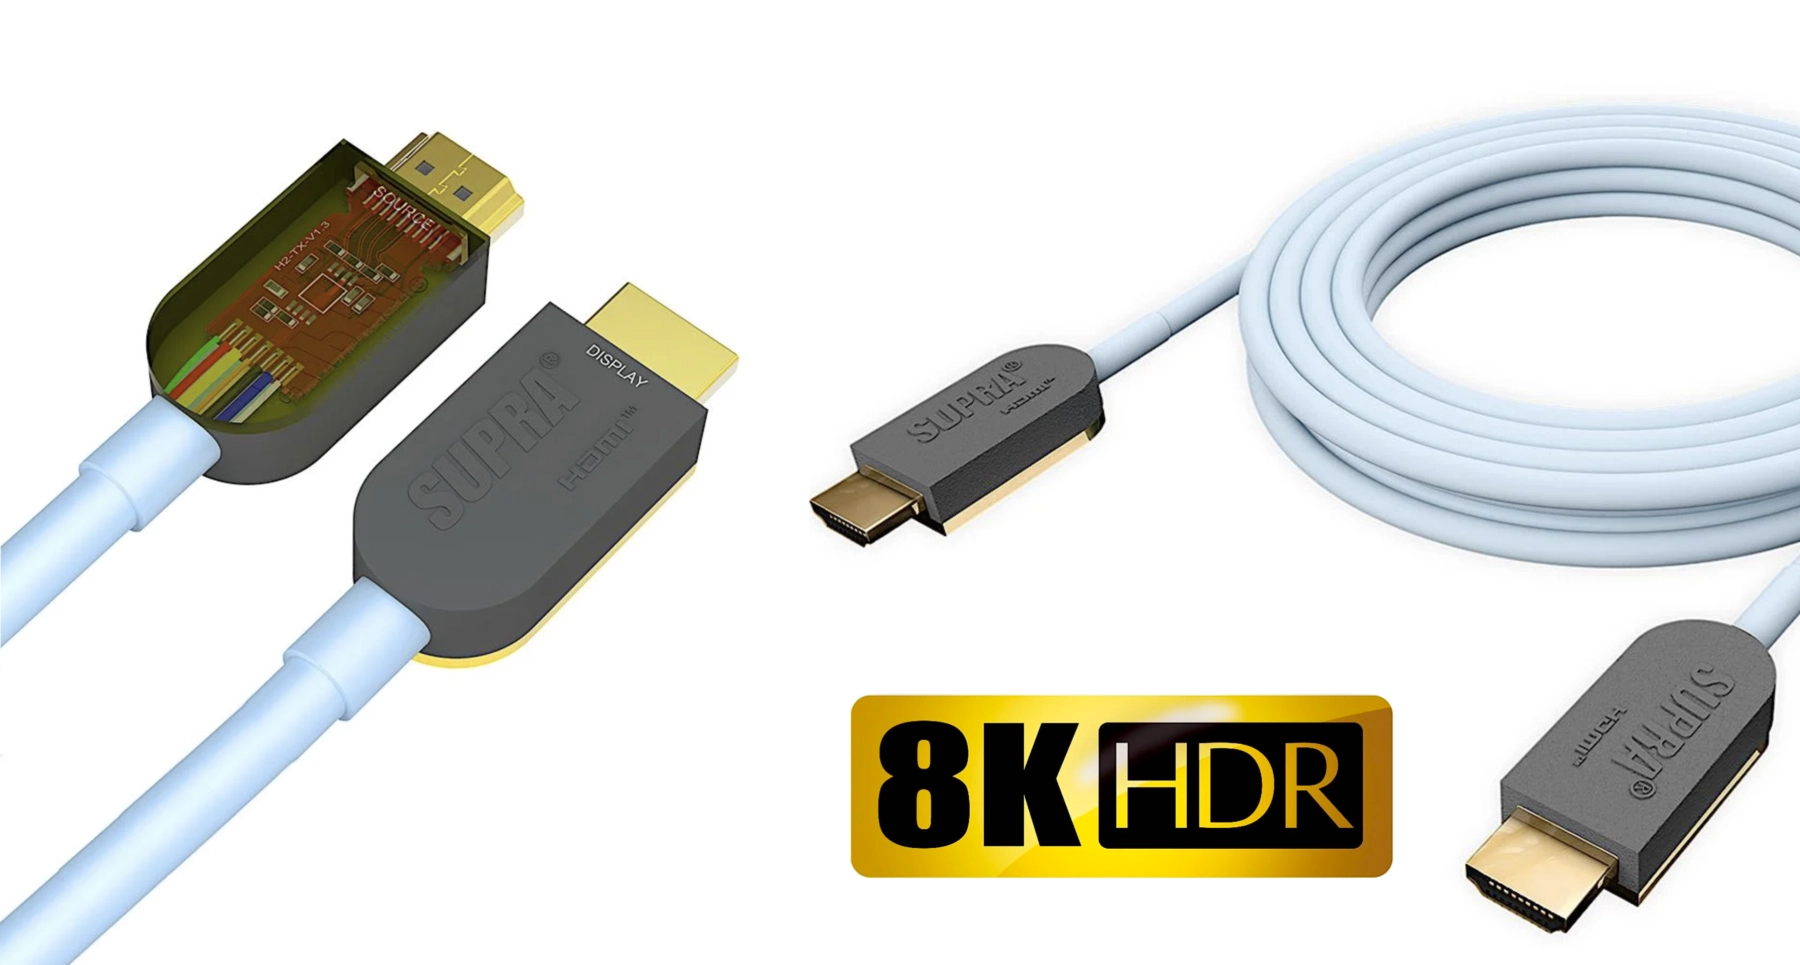 HDMI-Kabel für 8K HDR bis 30 Meter Länge: Supra HDMI Active Optical Cable 8K HDR